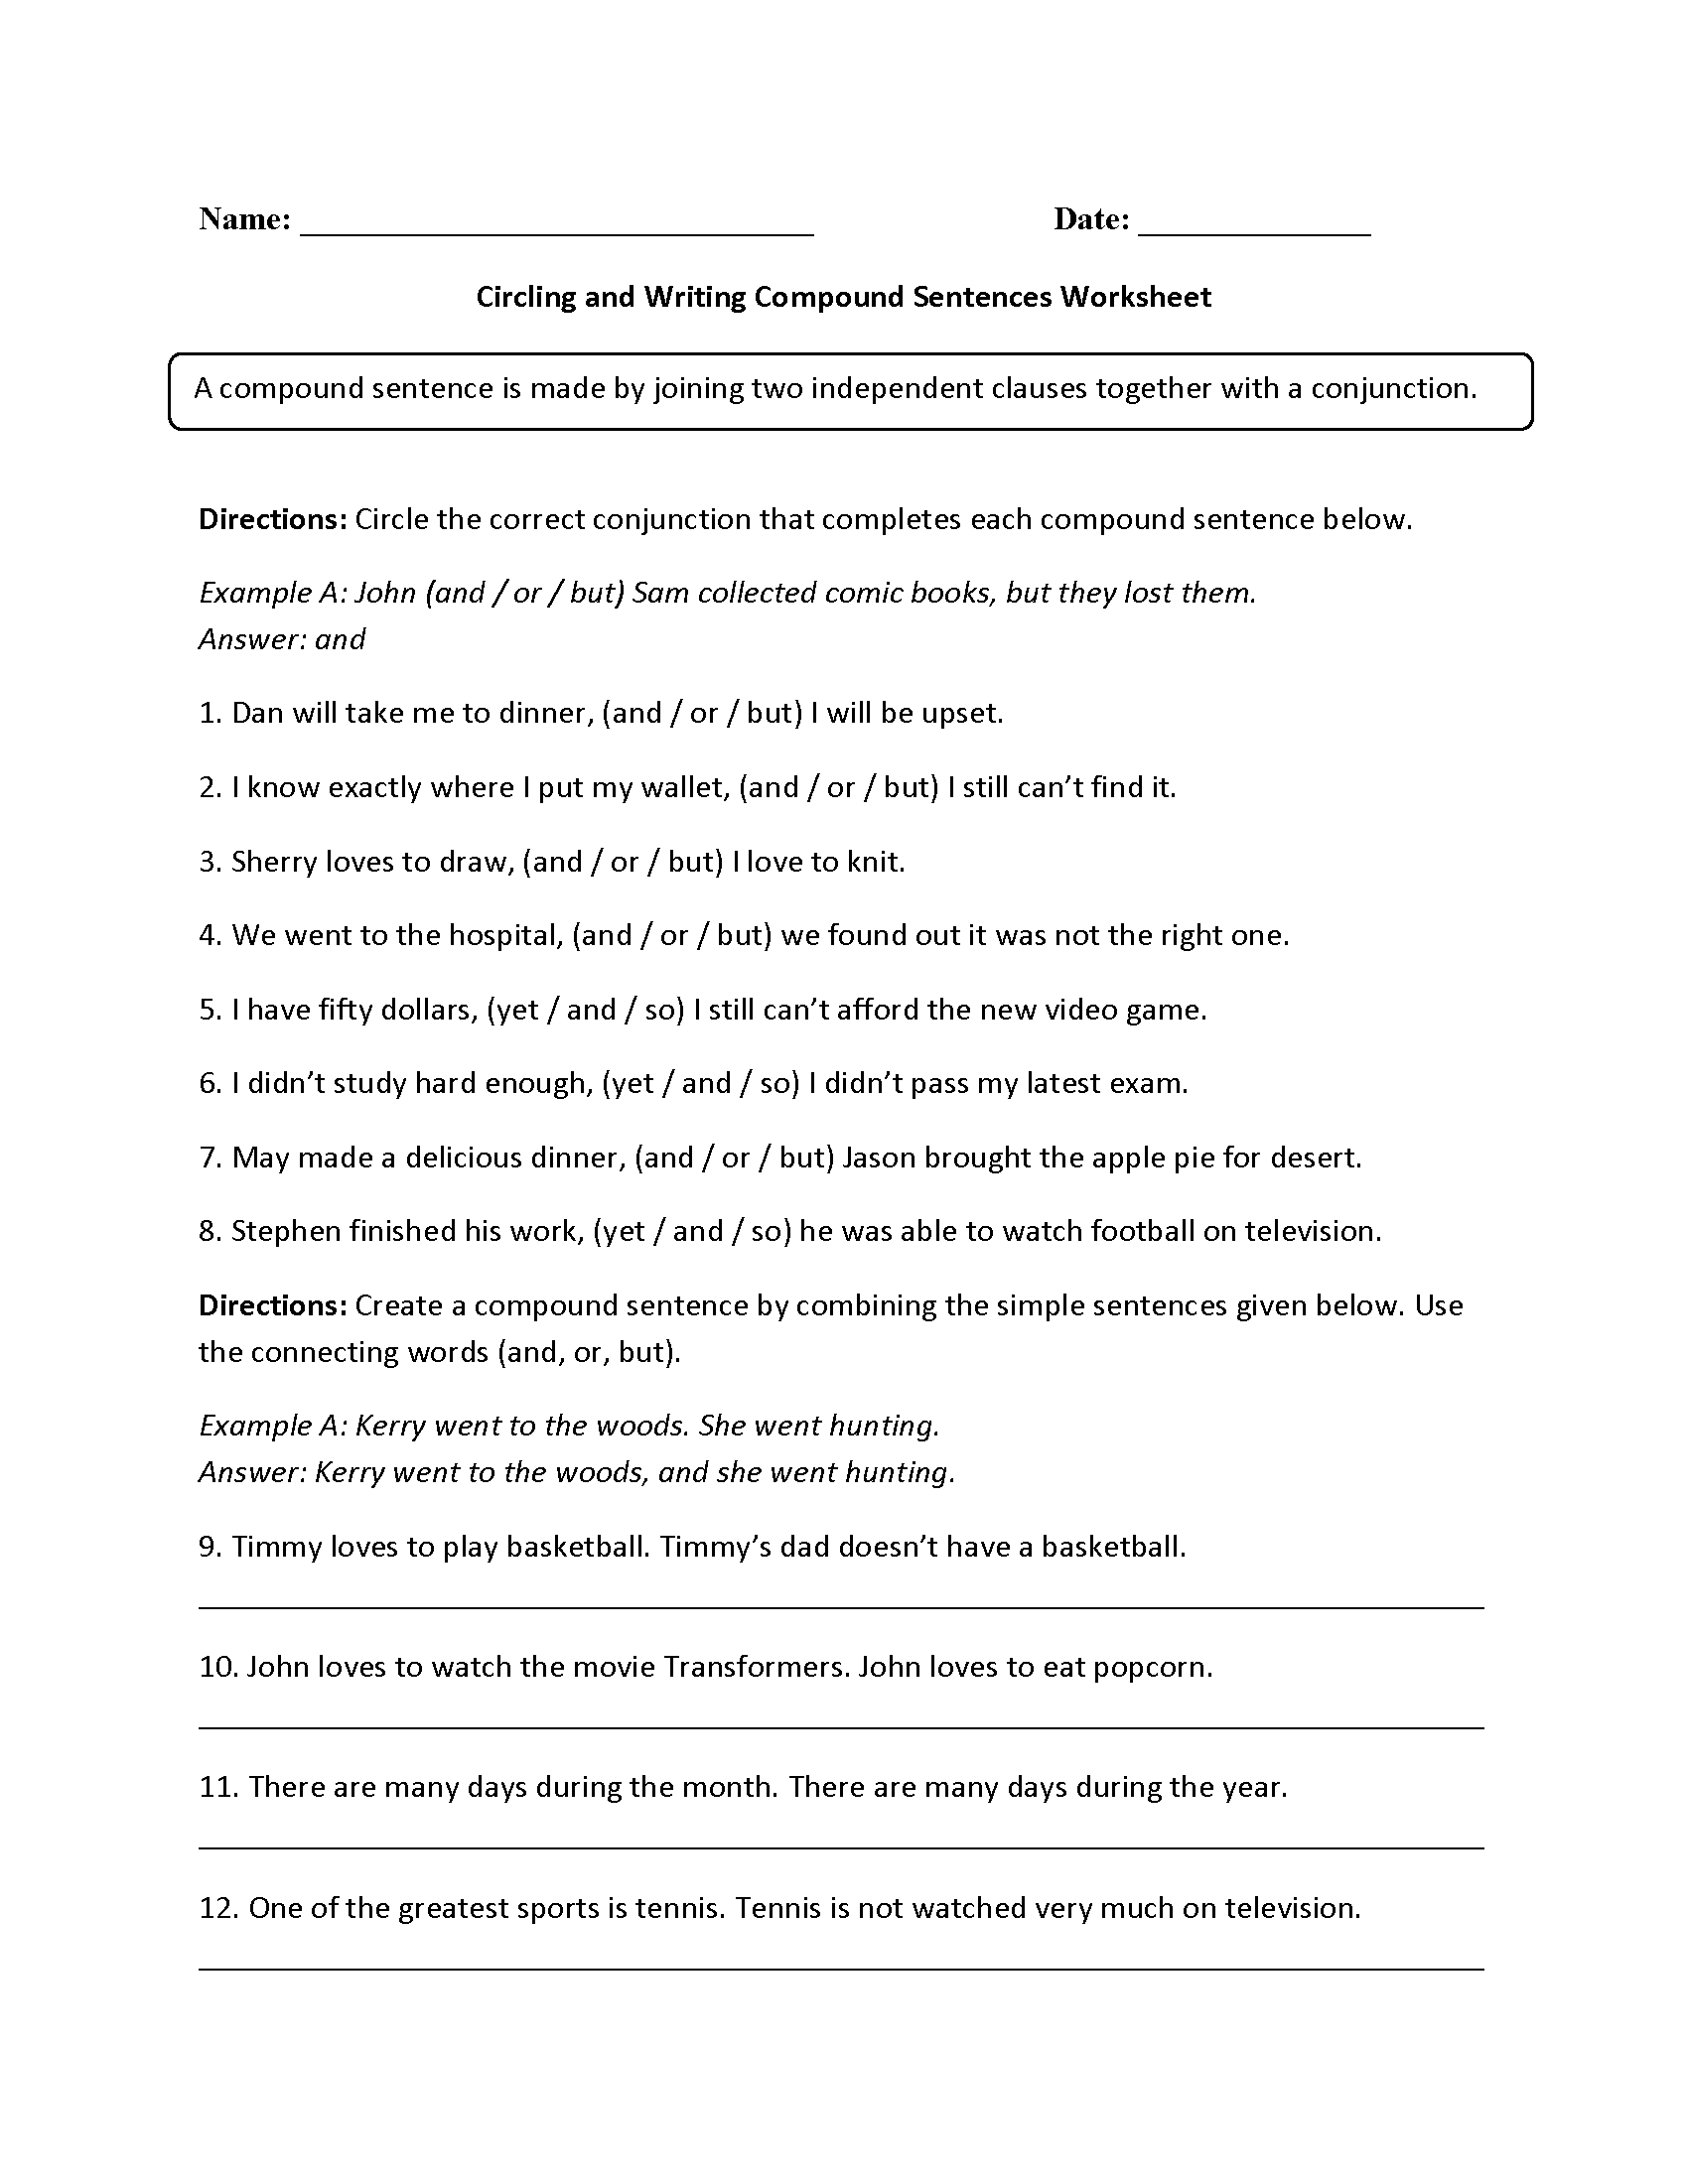 combining-sentences-worksheet-10th-grade-sentenceworksheets